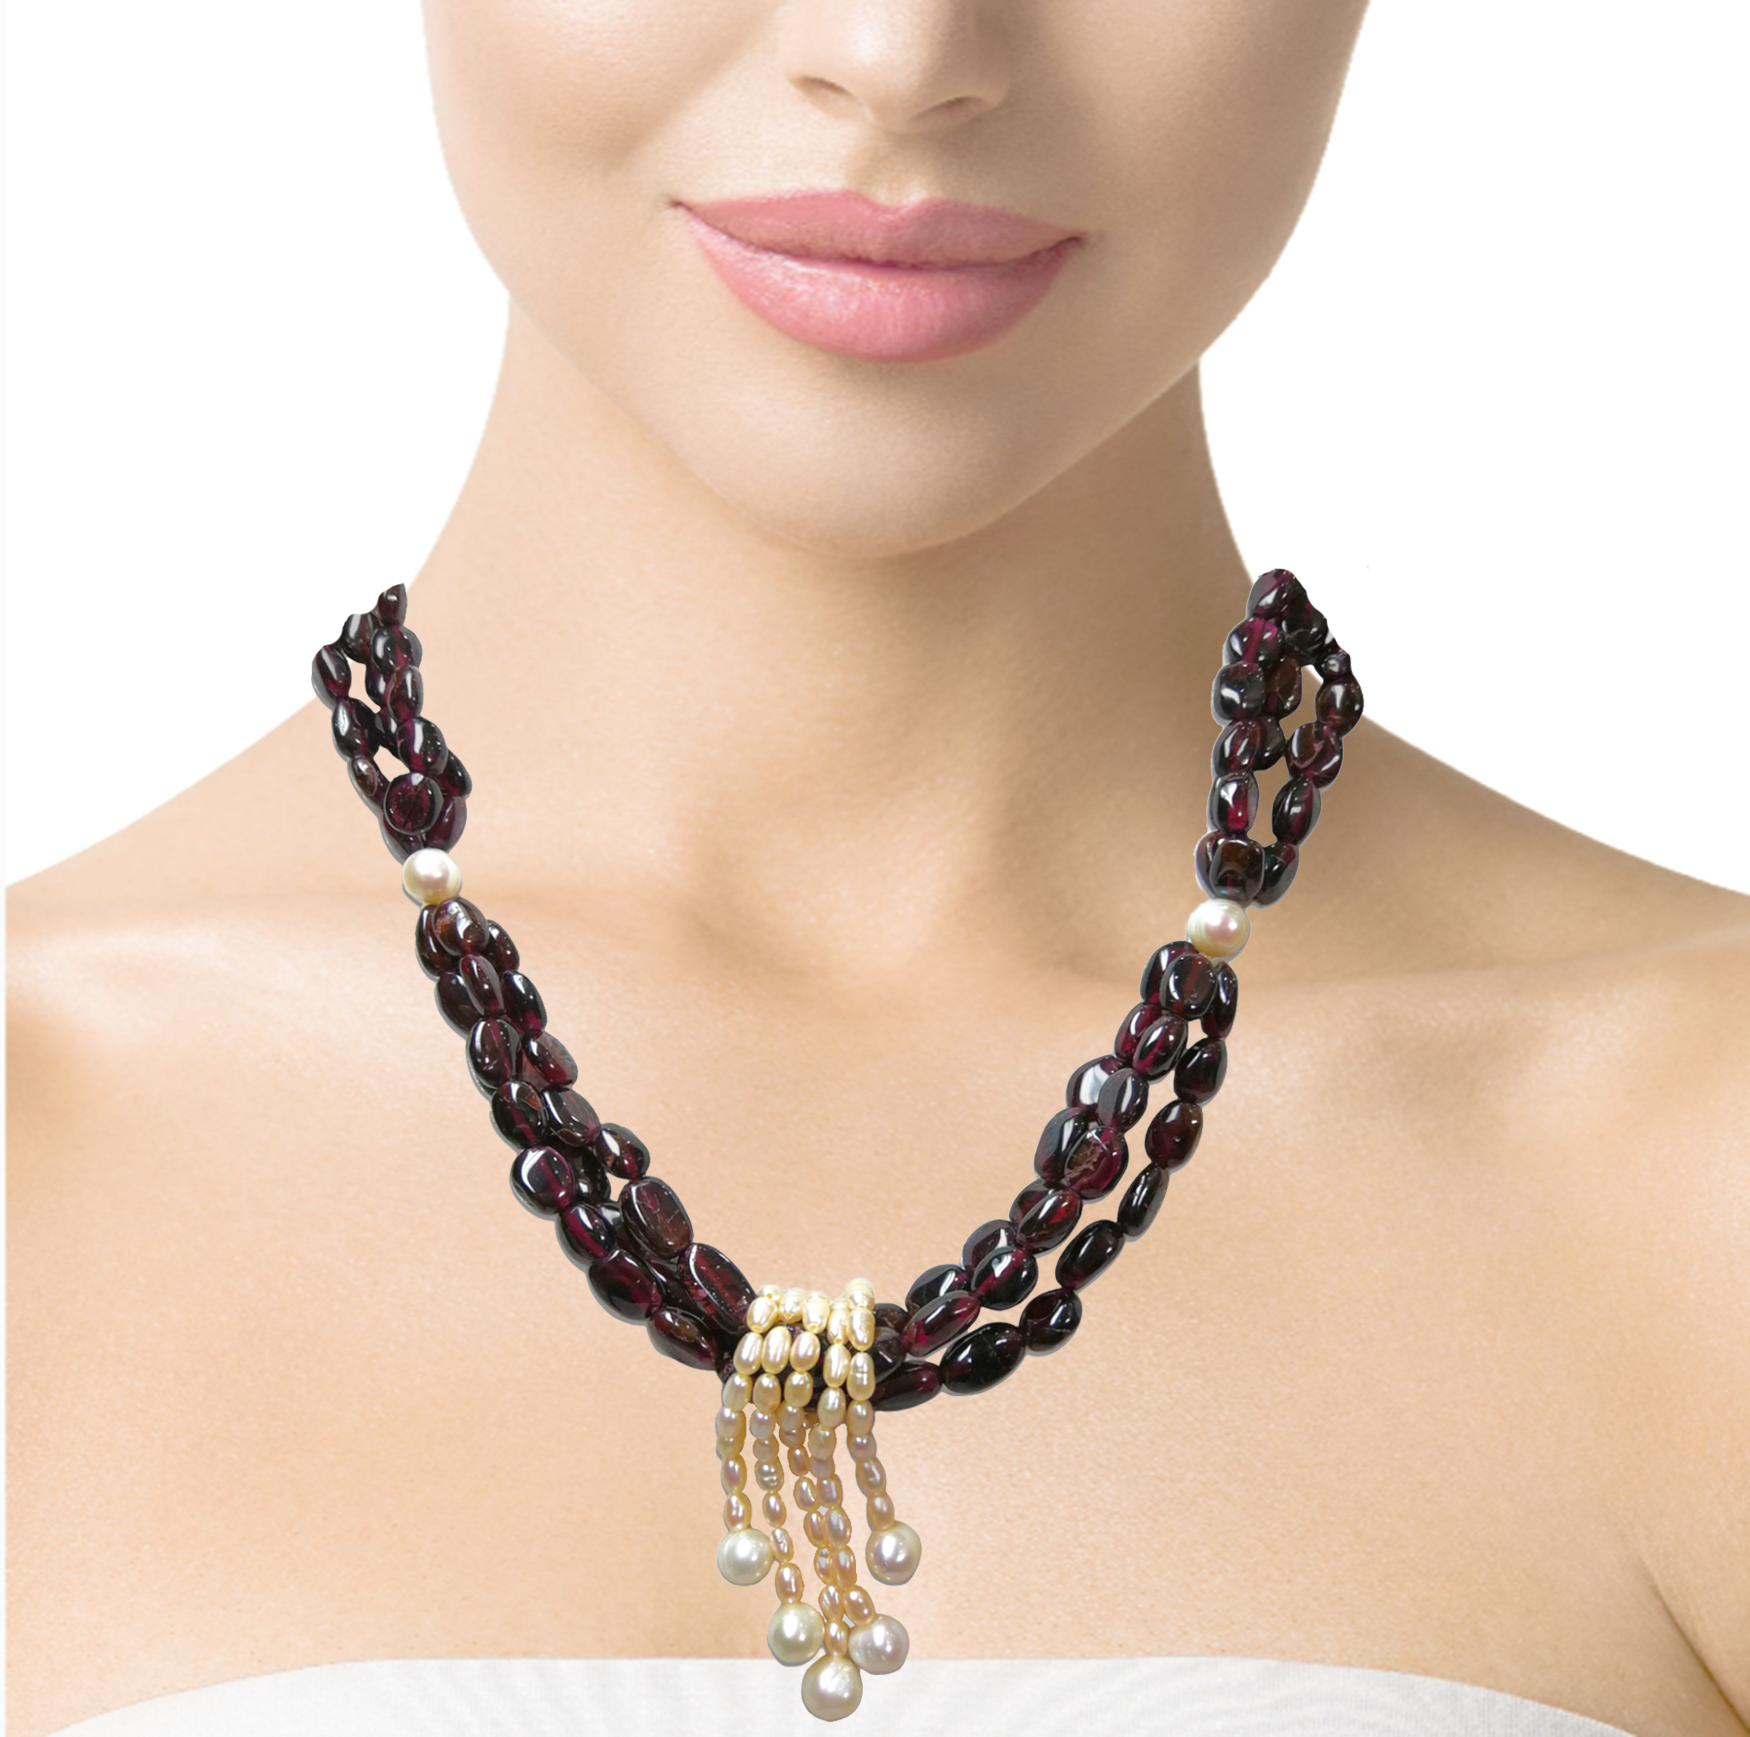 Natural Handmade Necklace 16"-18" Mani Garnet Pearls Gemstone Beads Jewellery